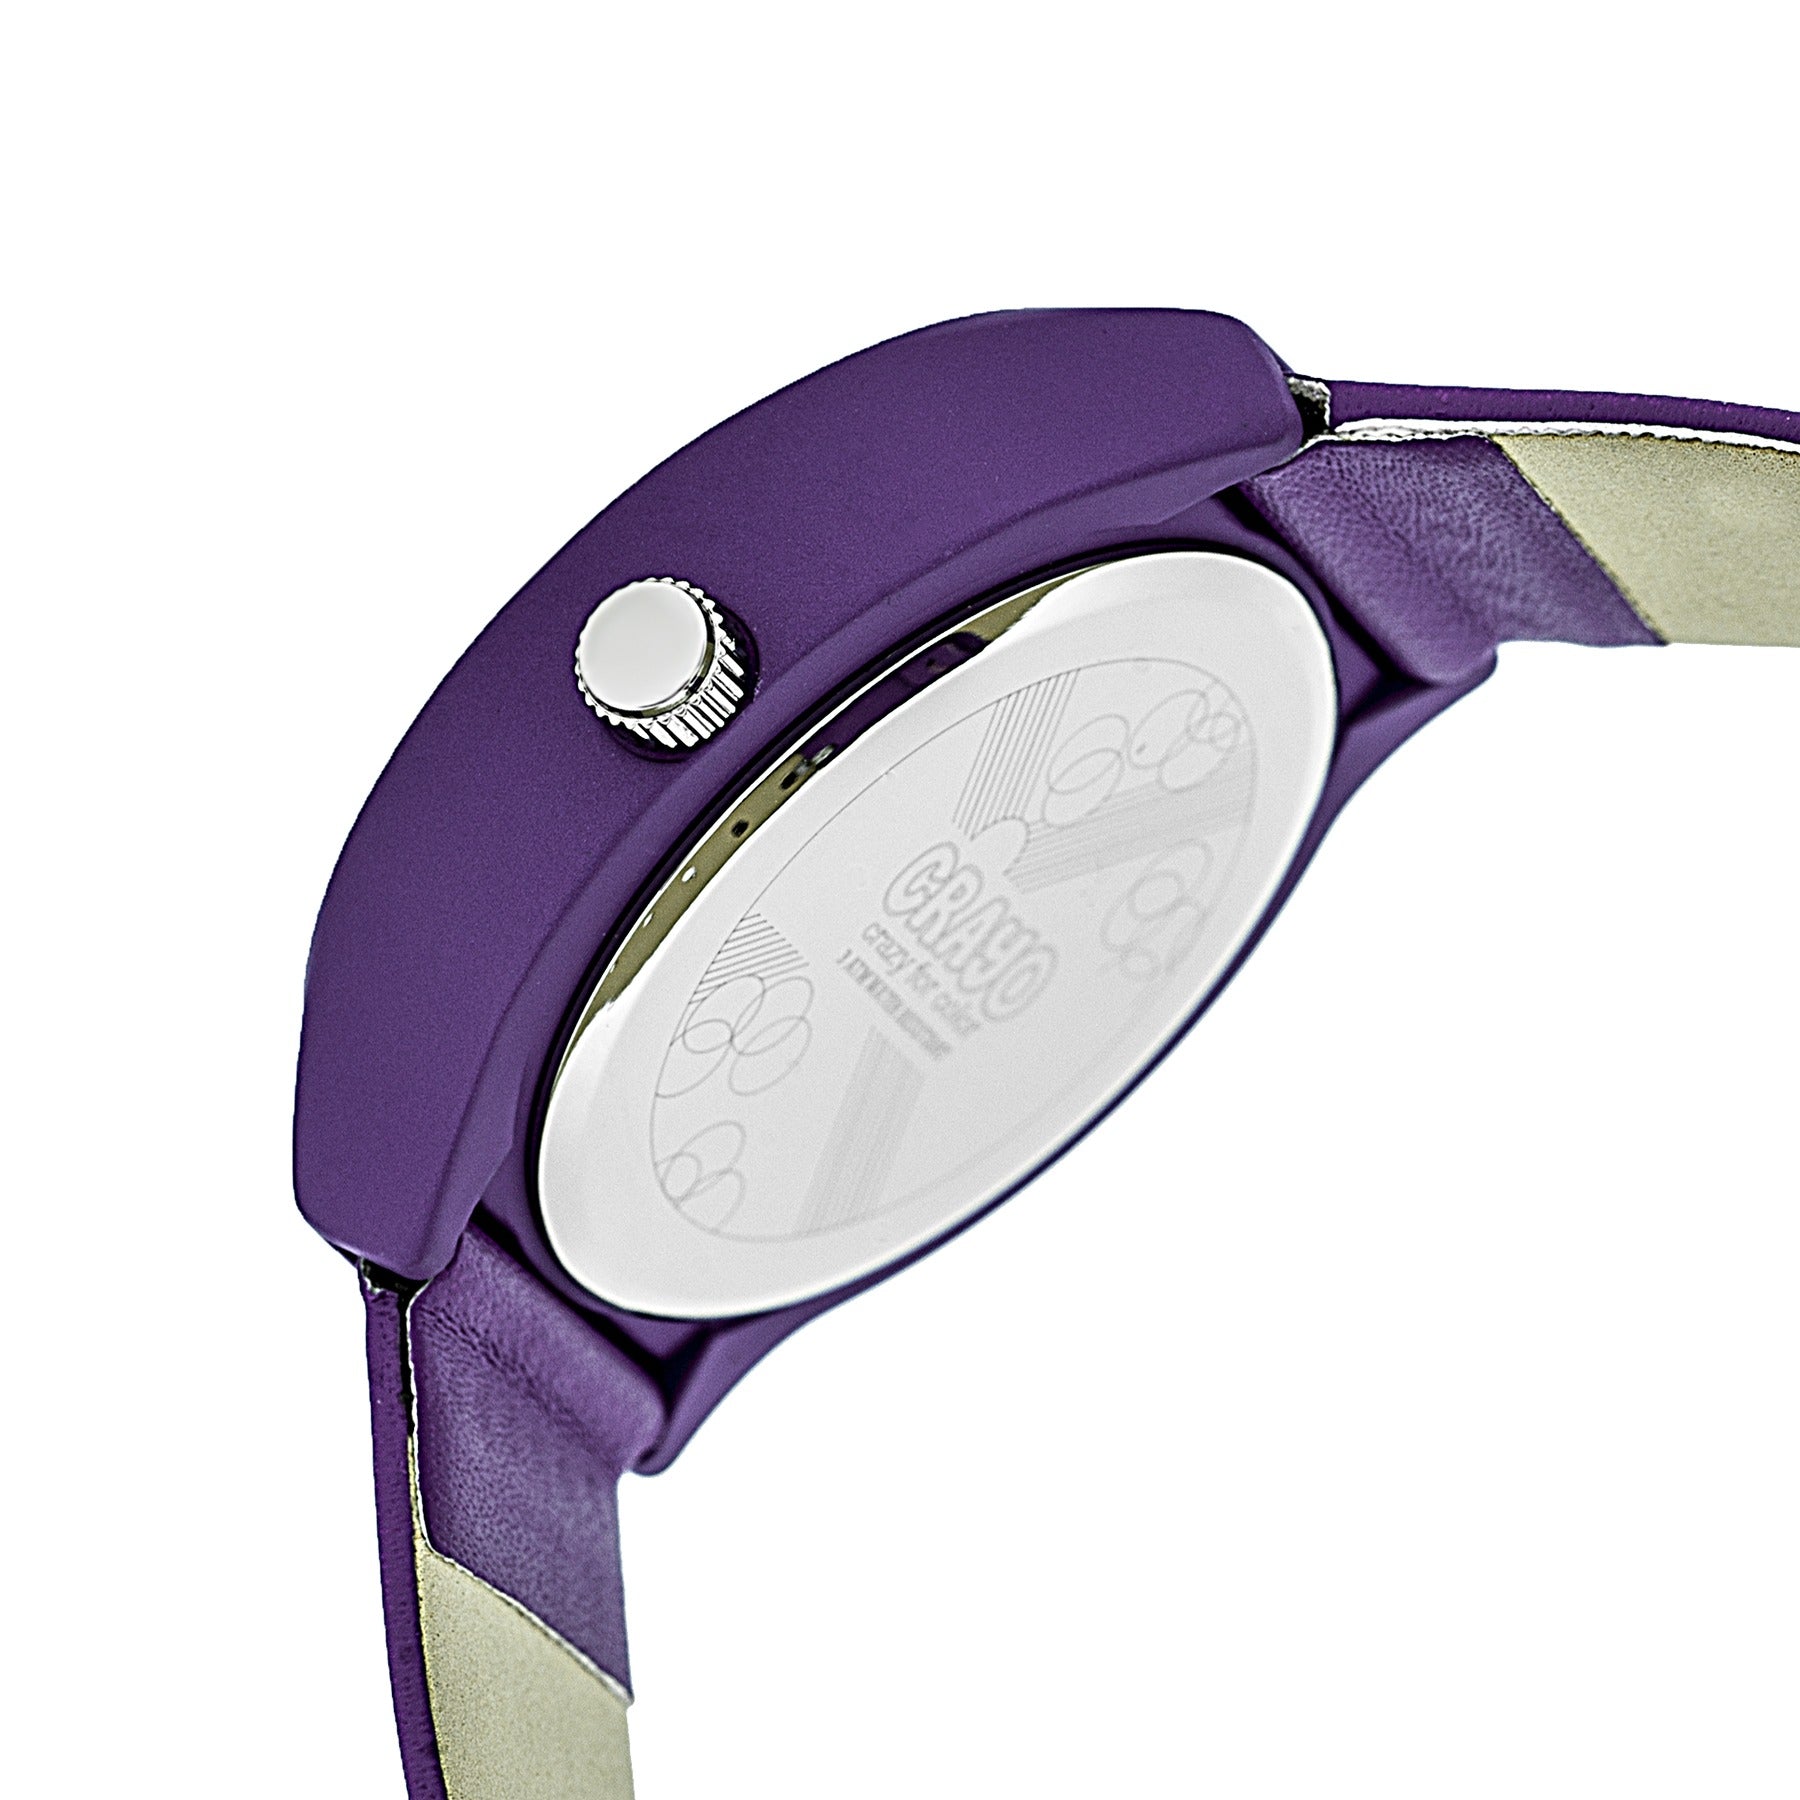 Crayo Atomic Unisex Watch - Purple - CRACR3507